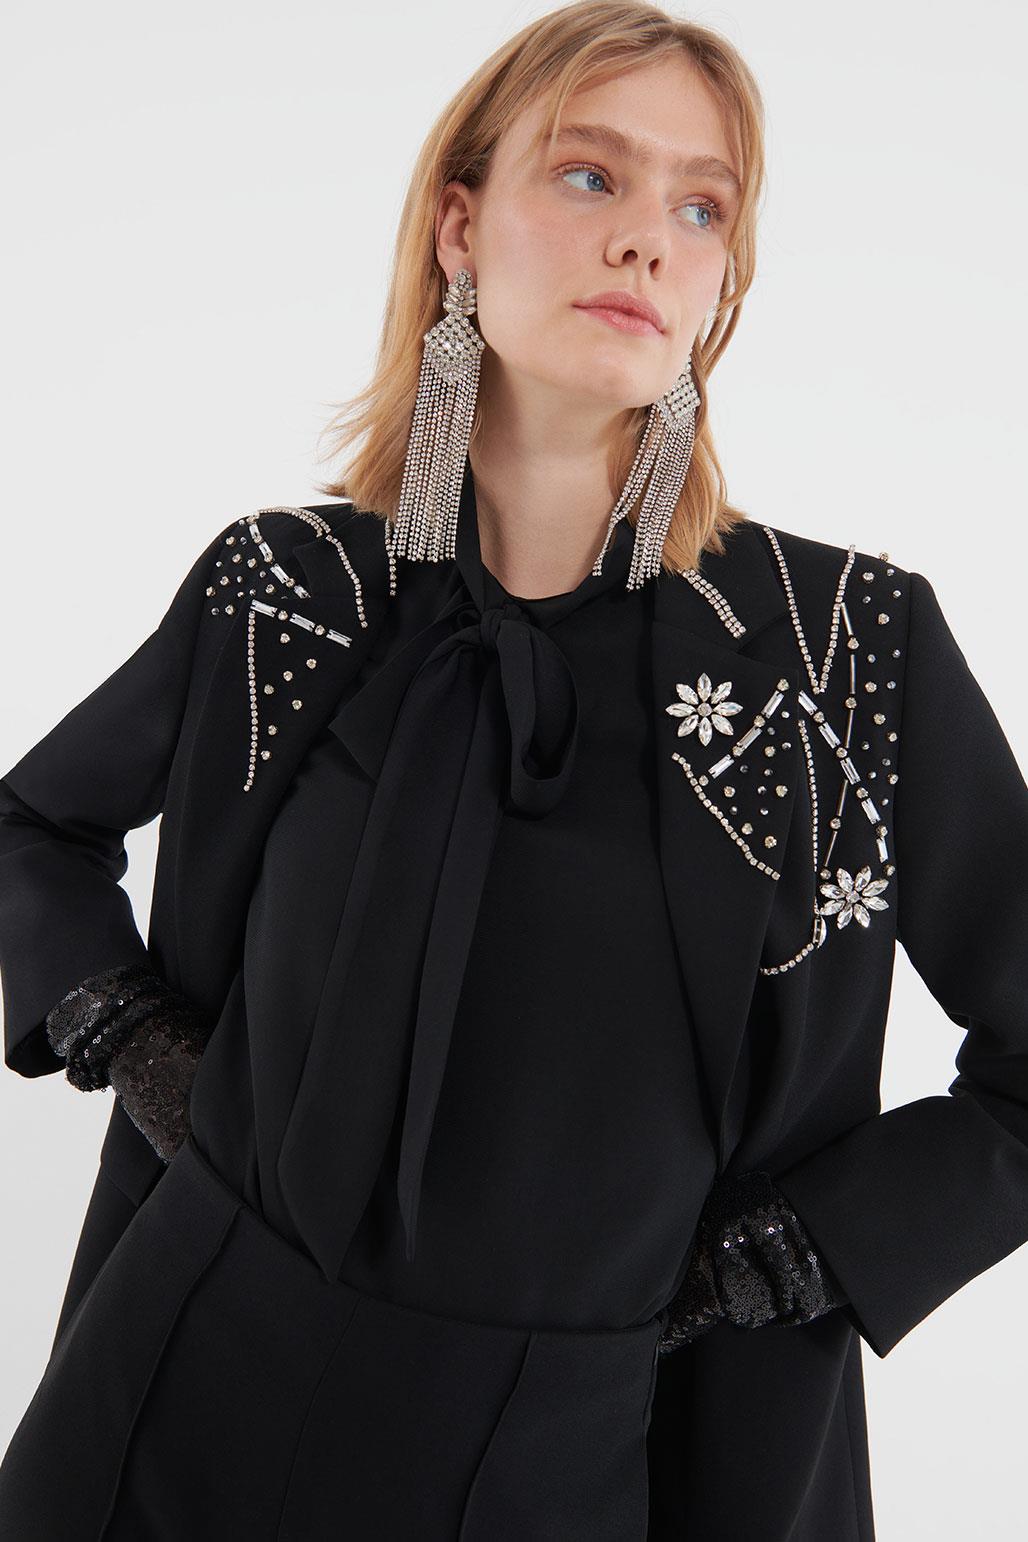 Crystal Embroidered Stone Jacket Black